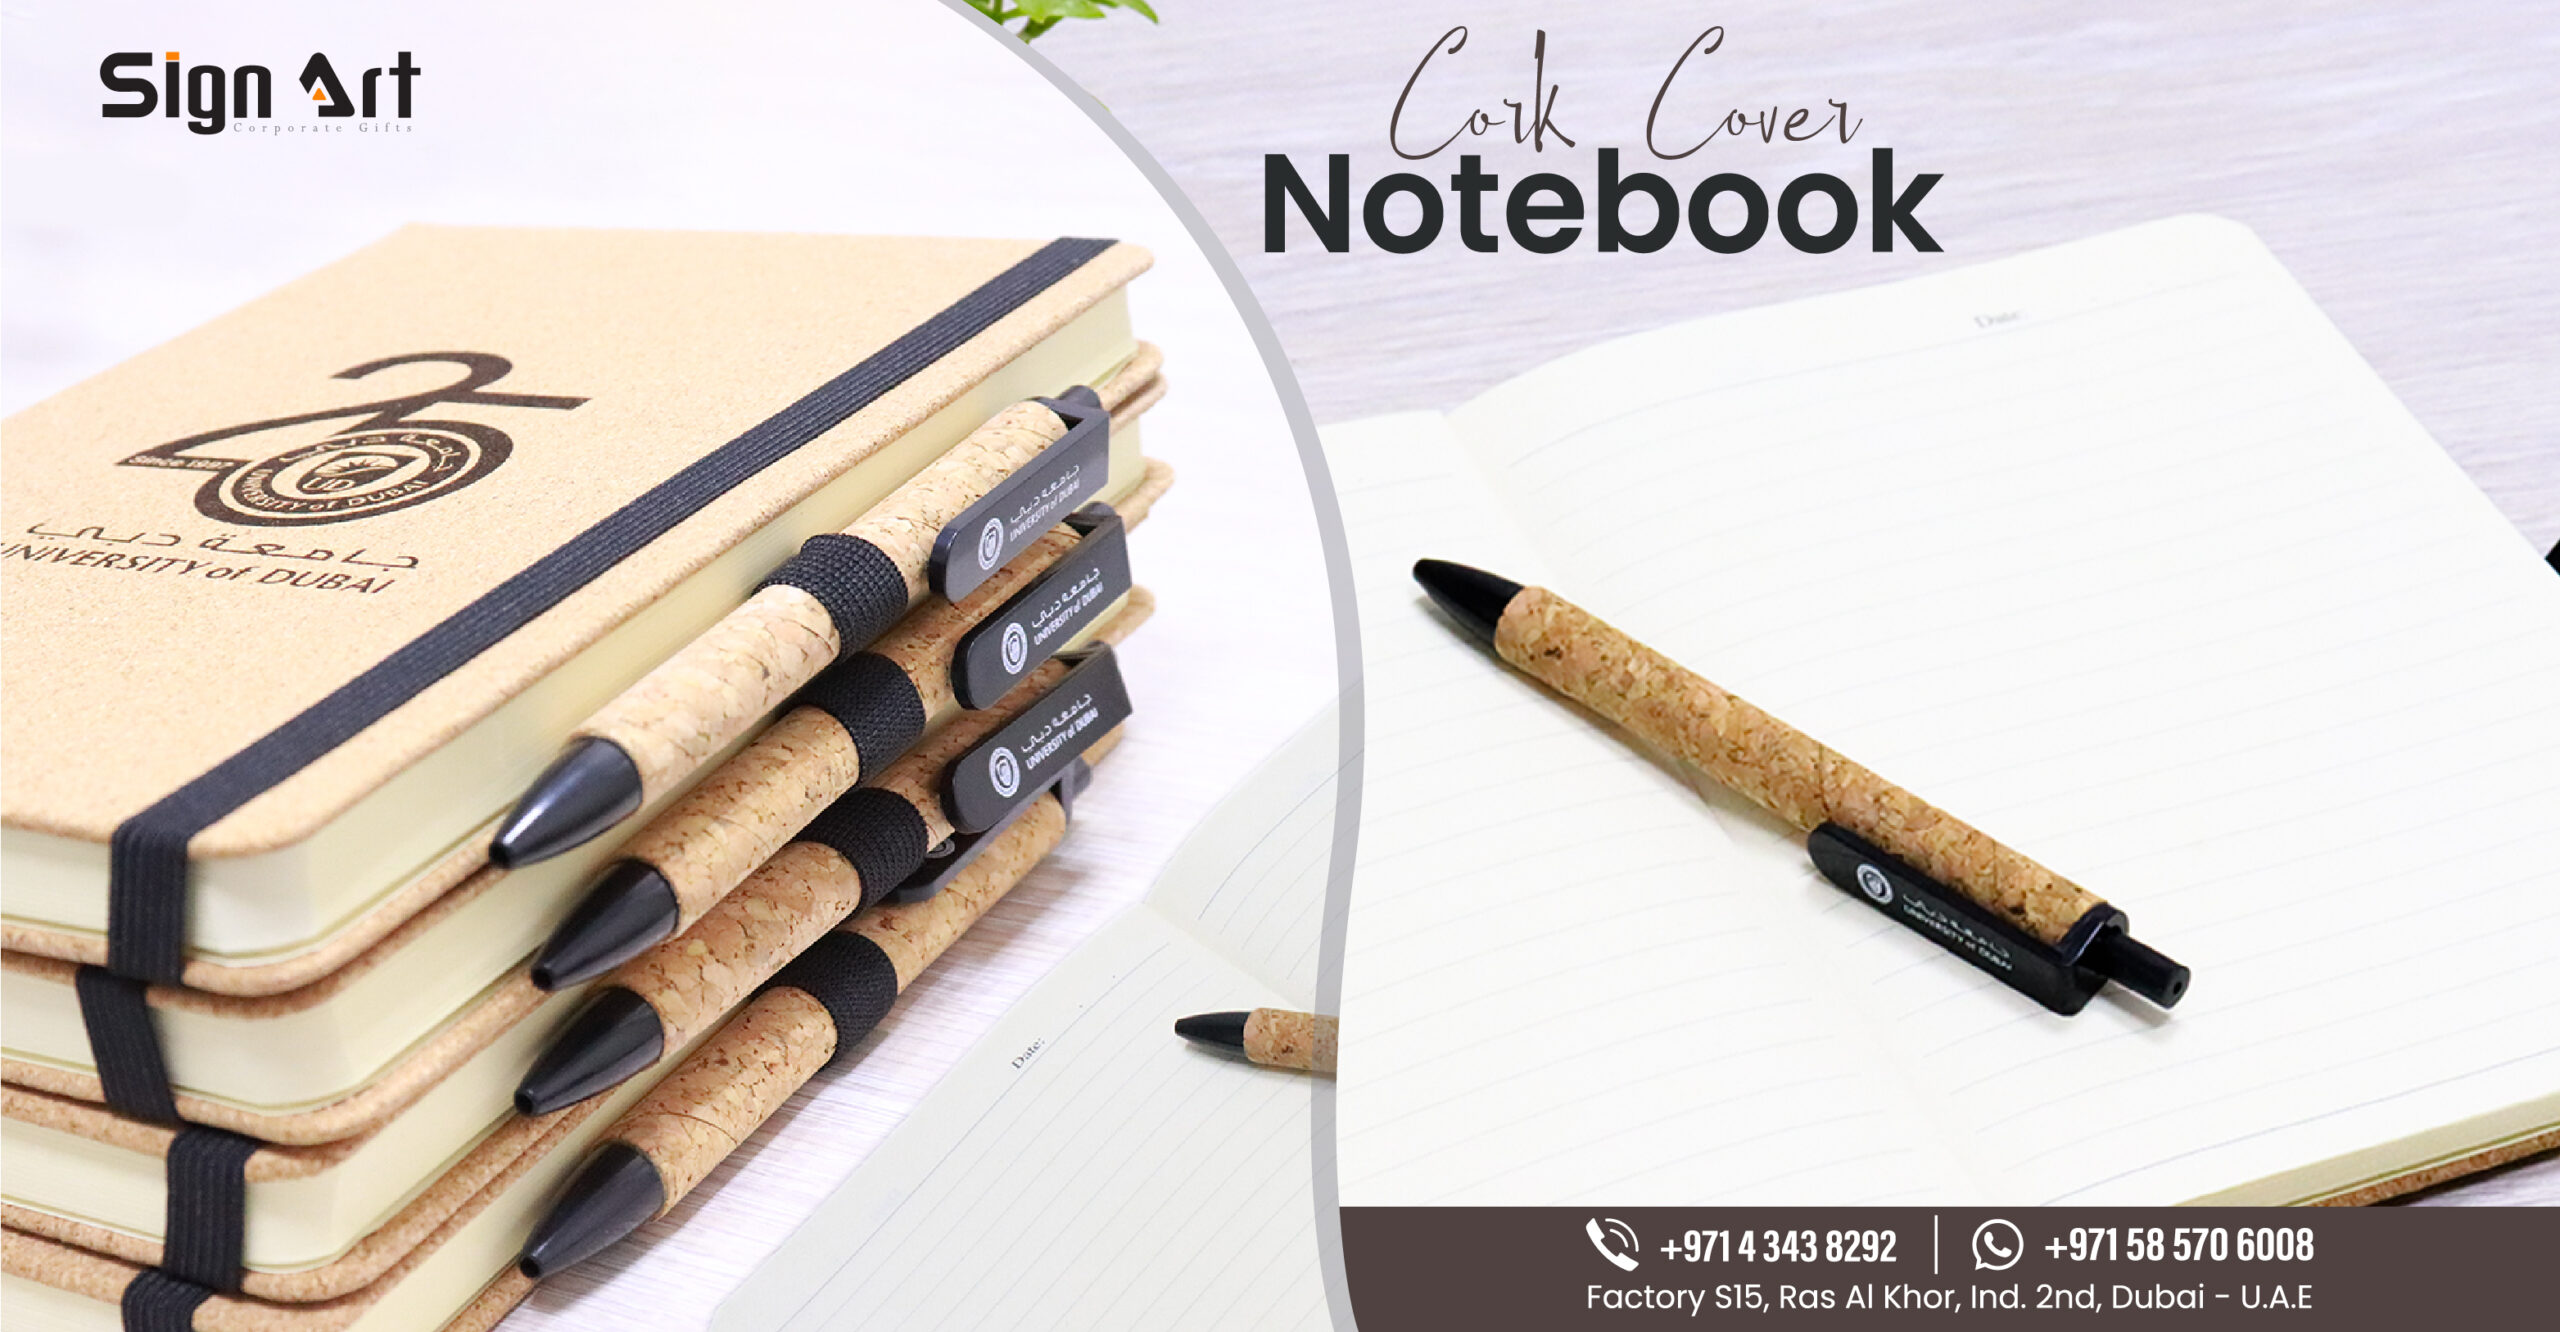 Cork Cover Notebook-01.jpg